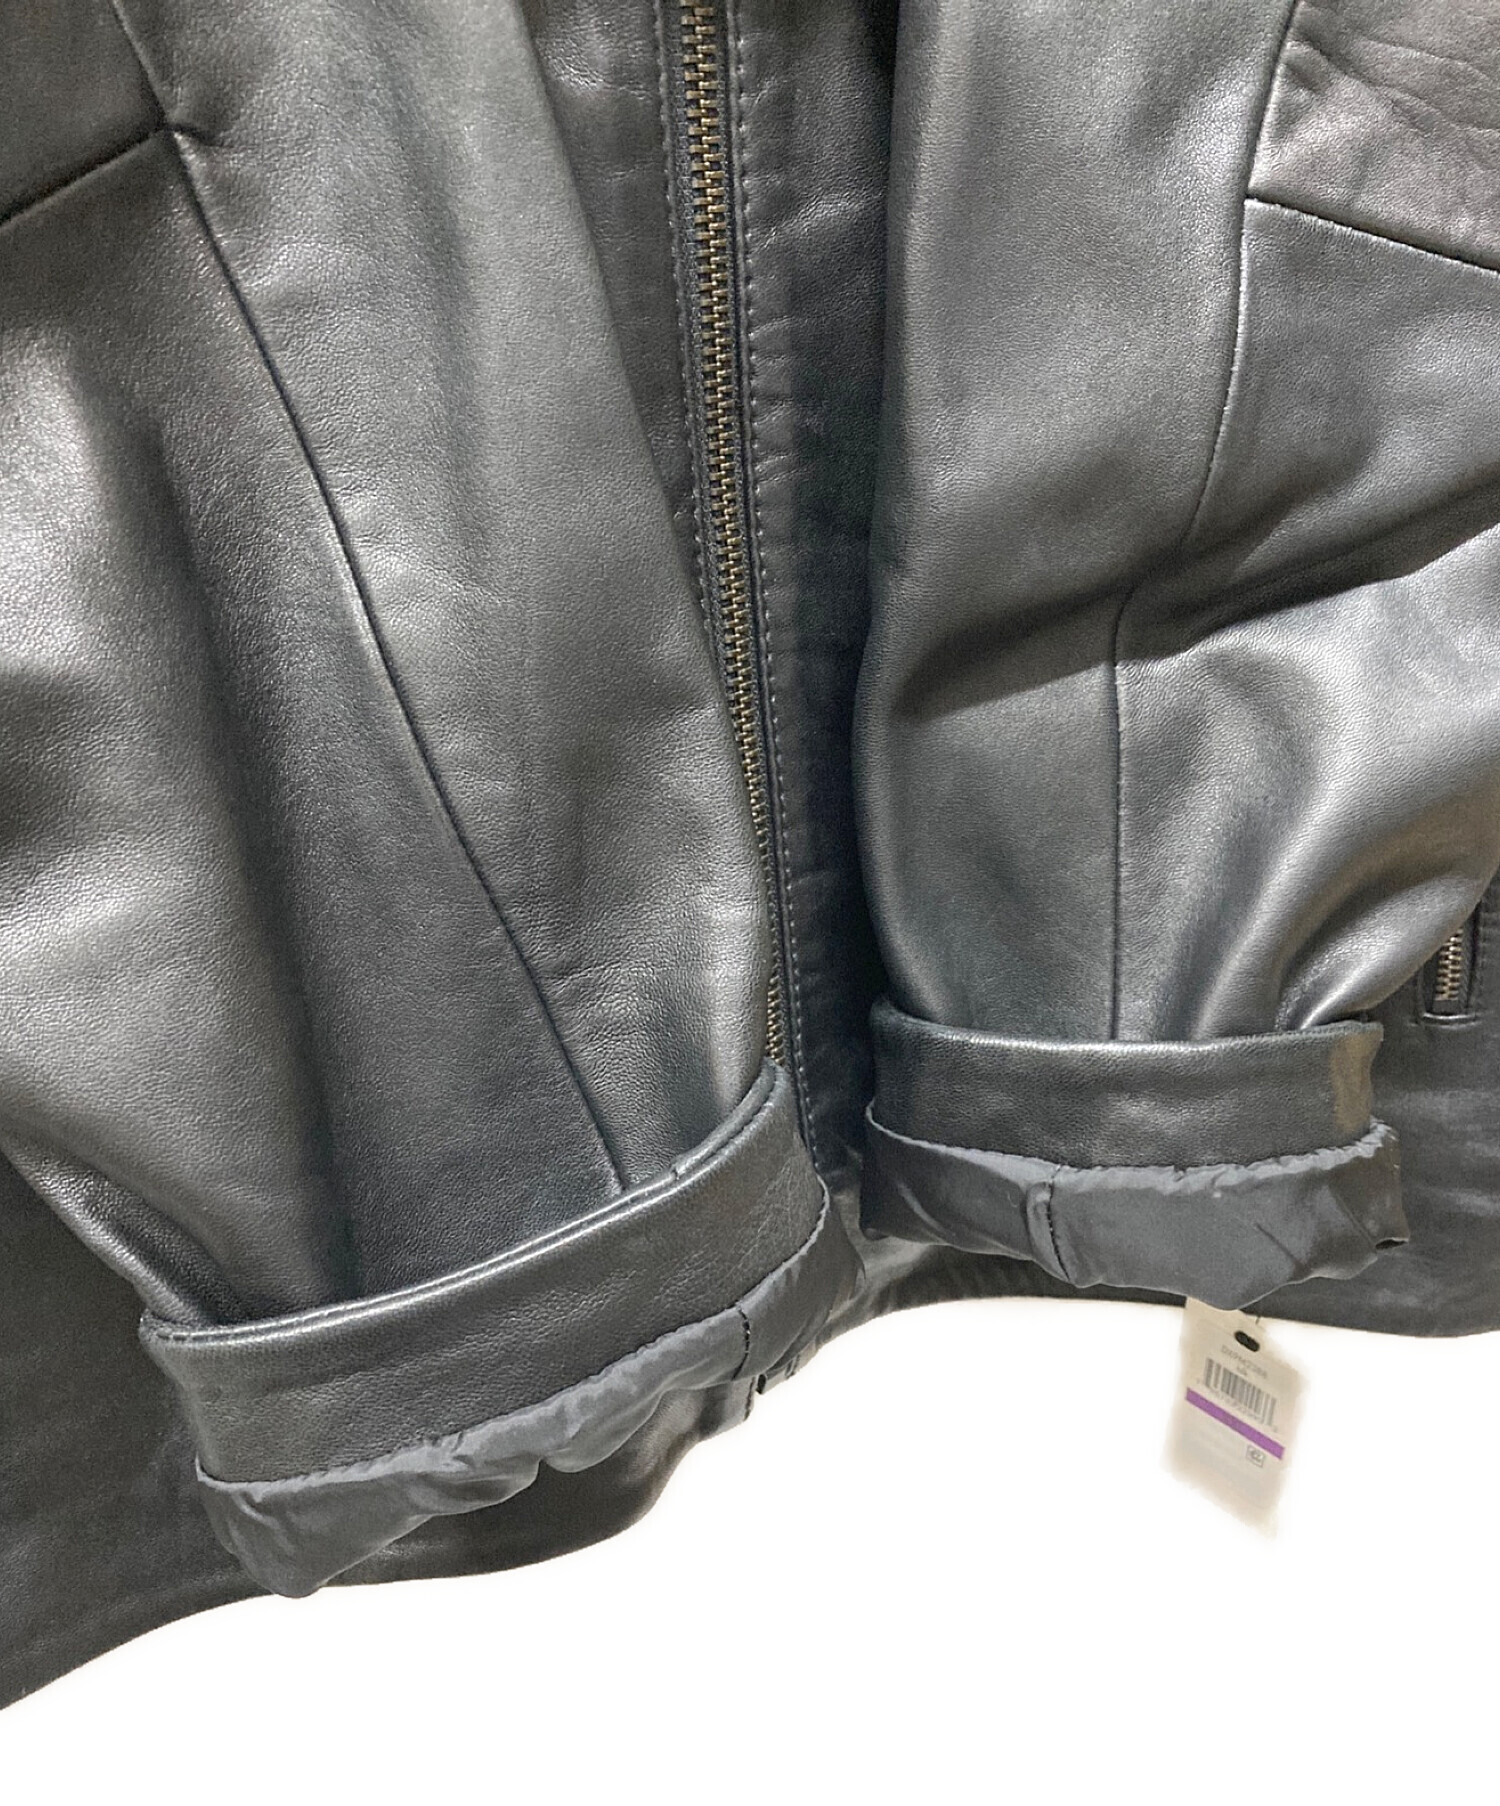 DKNY (ダナキャランニューヨーク) フルジップ ライダースジャケット ブラック サイズ:XXL